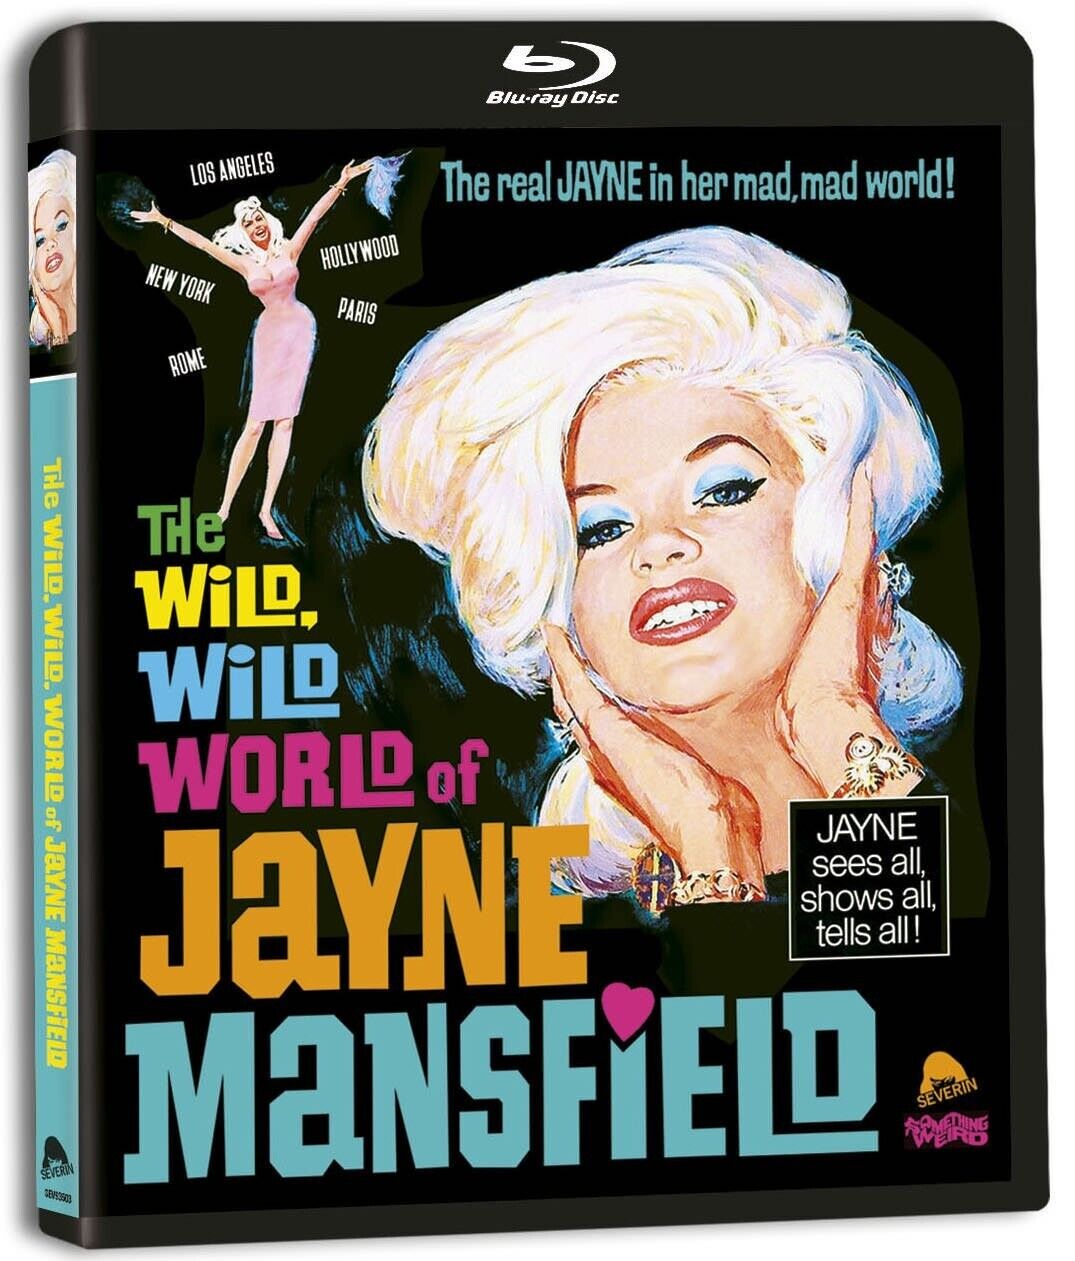 The Wild Wild World of Jayne Mansfield Blu-ray Documentary Comedy Travel